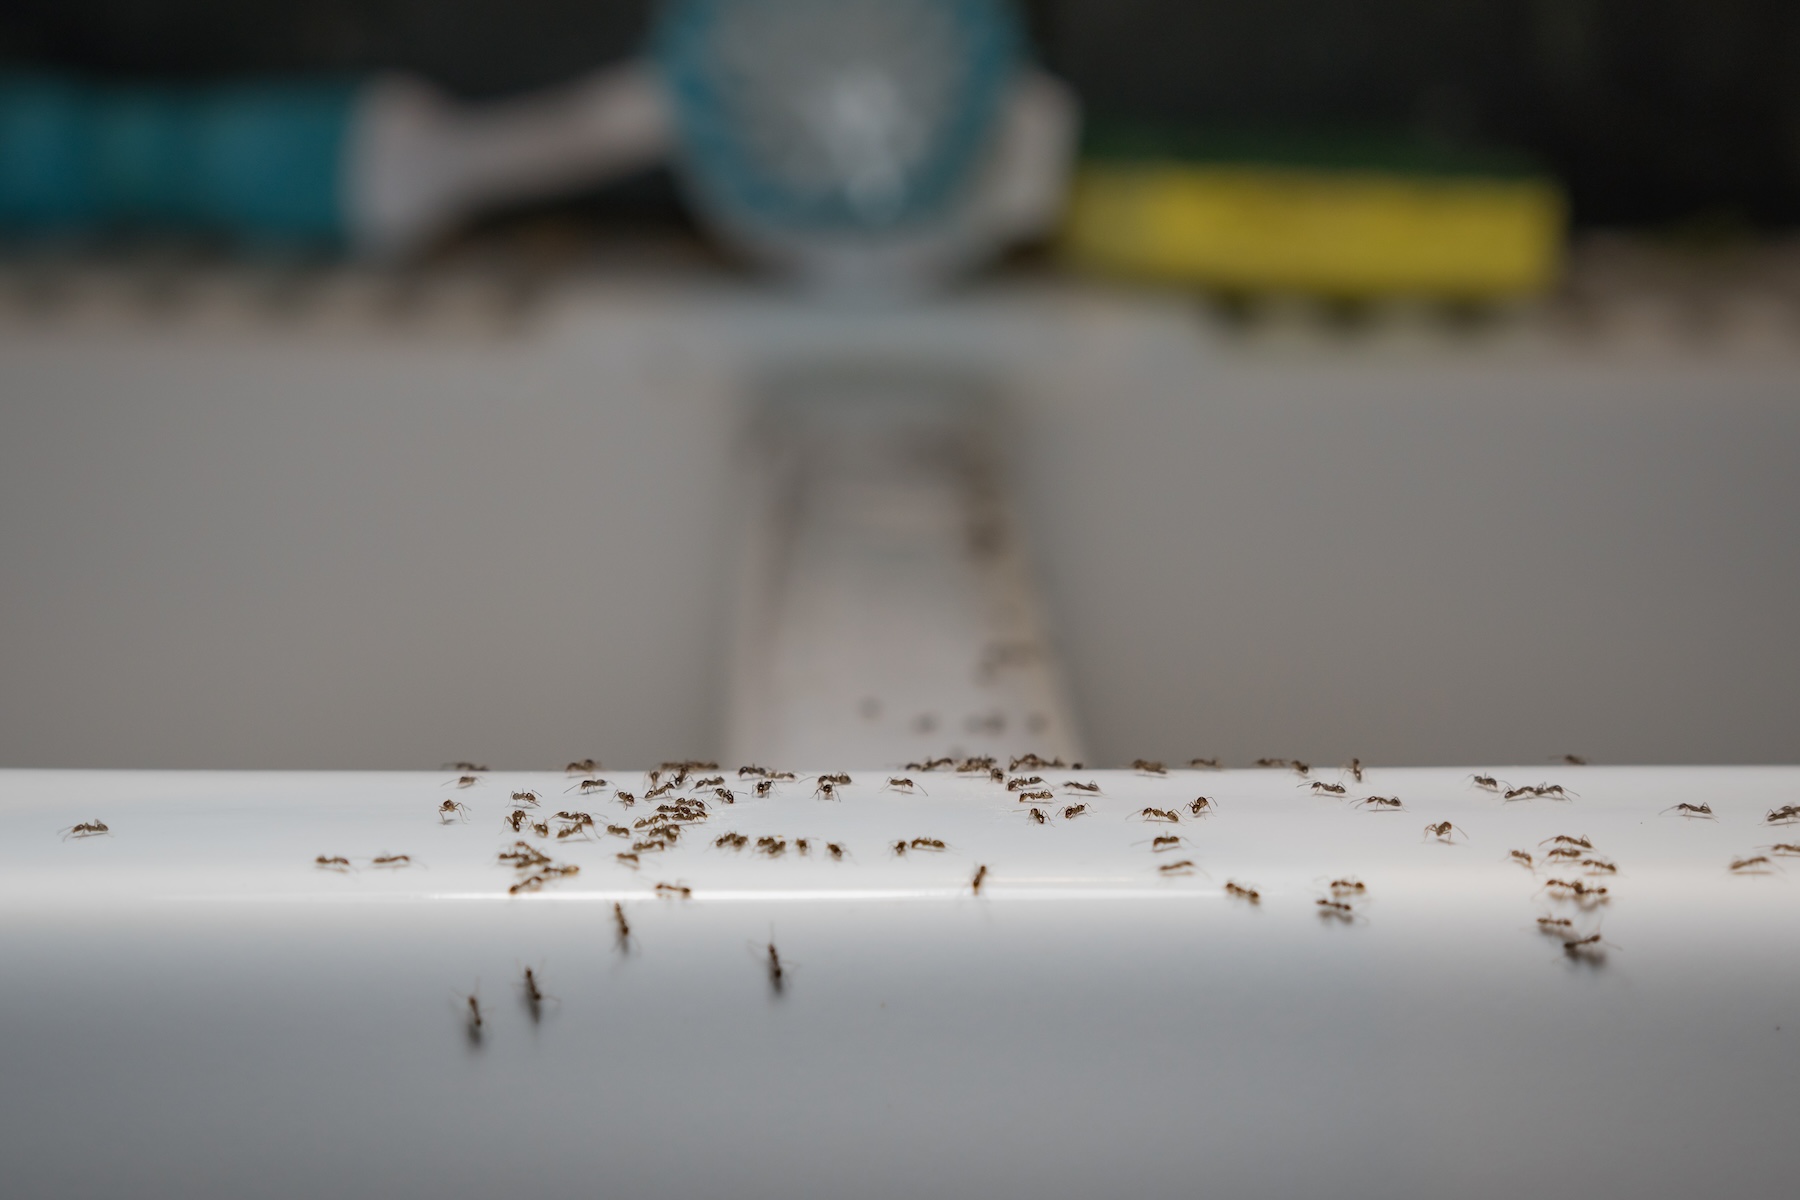 ants on kitchen sink